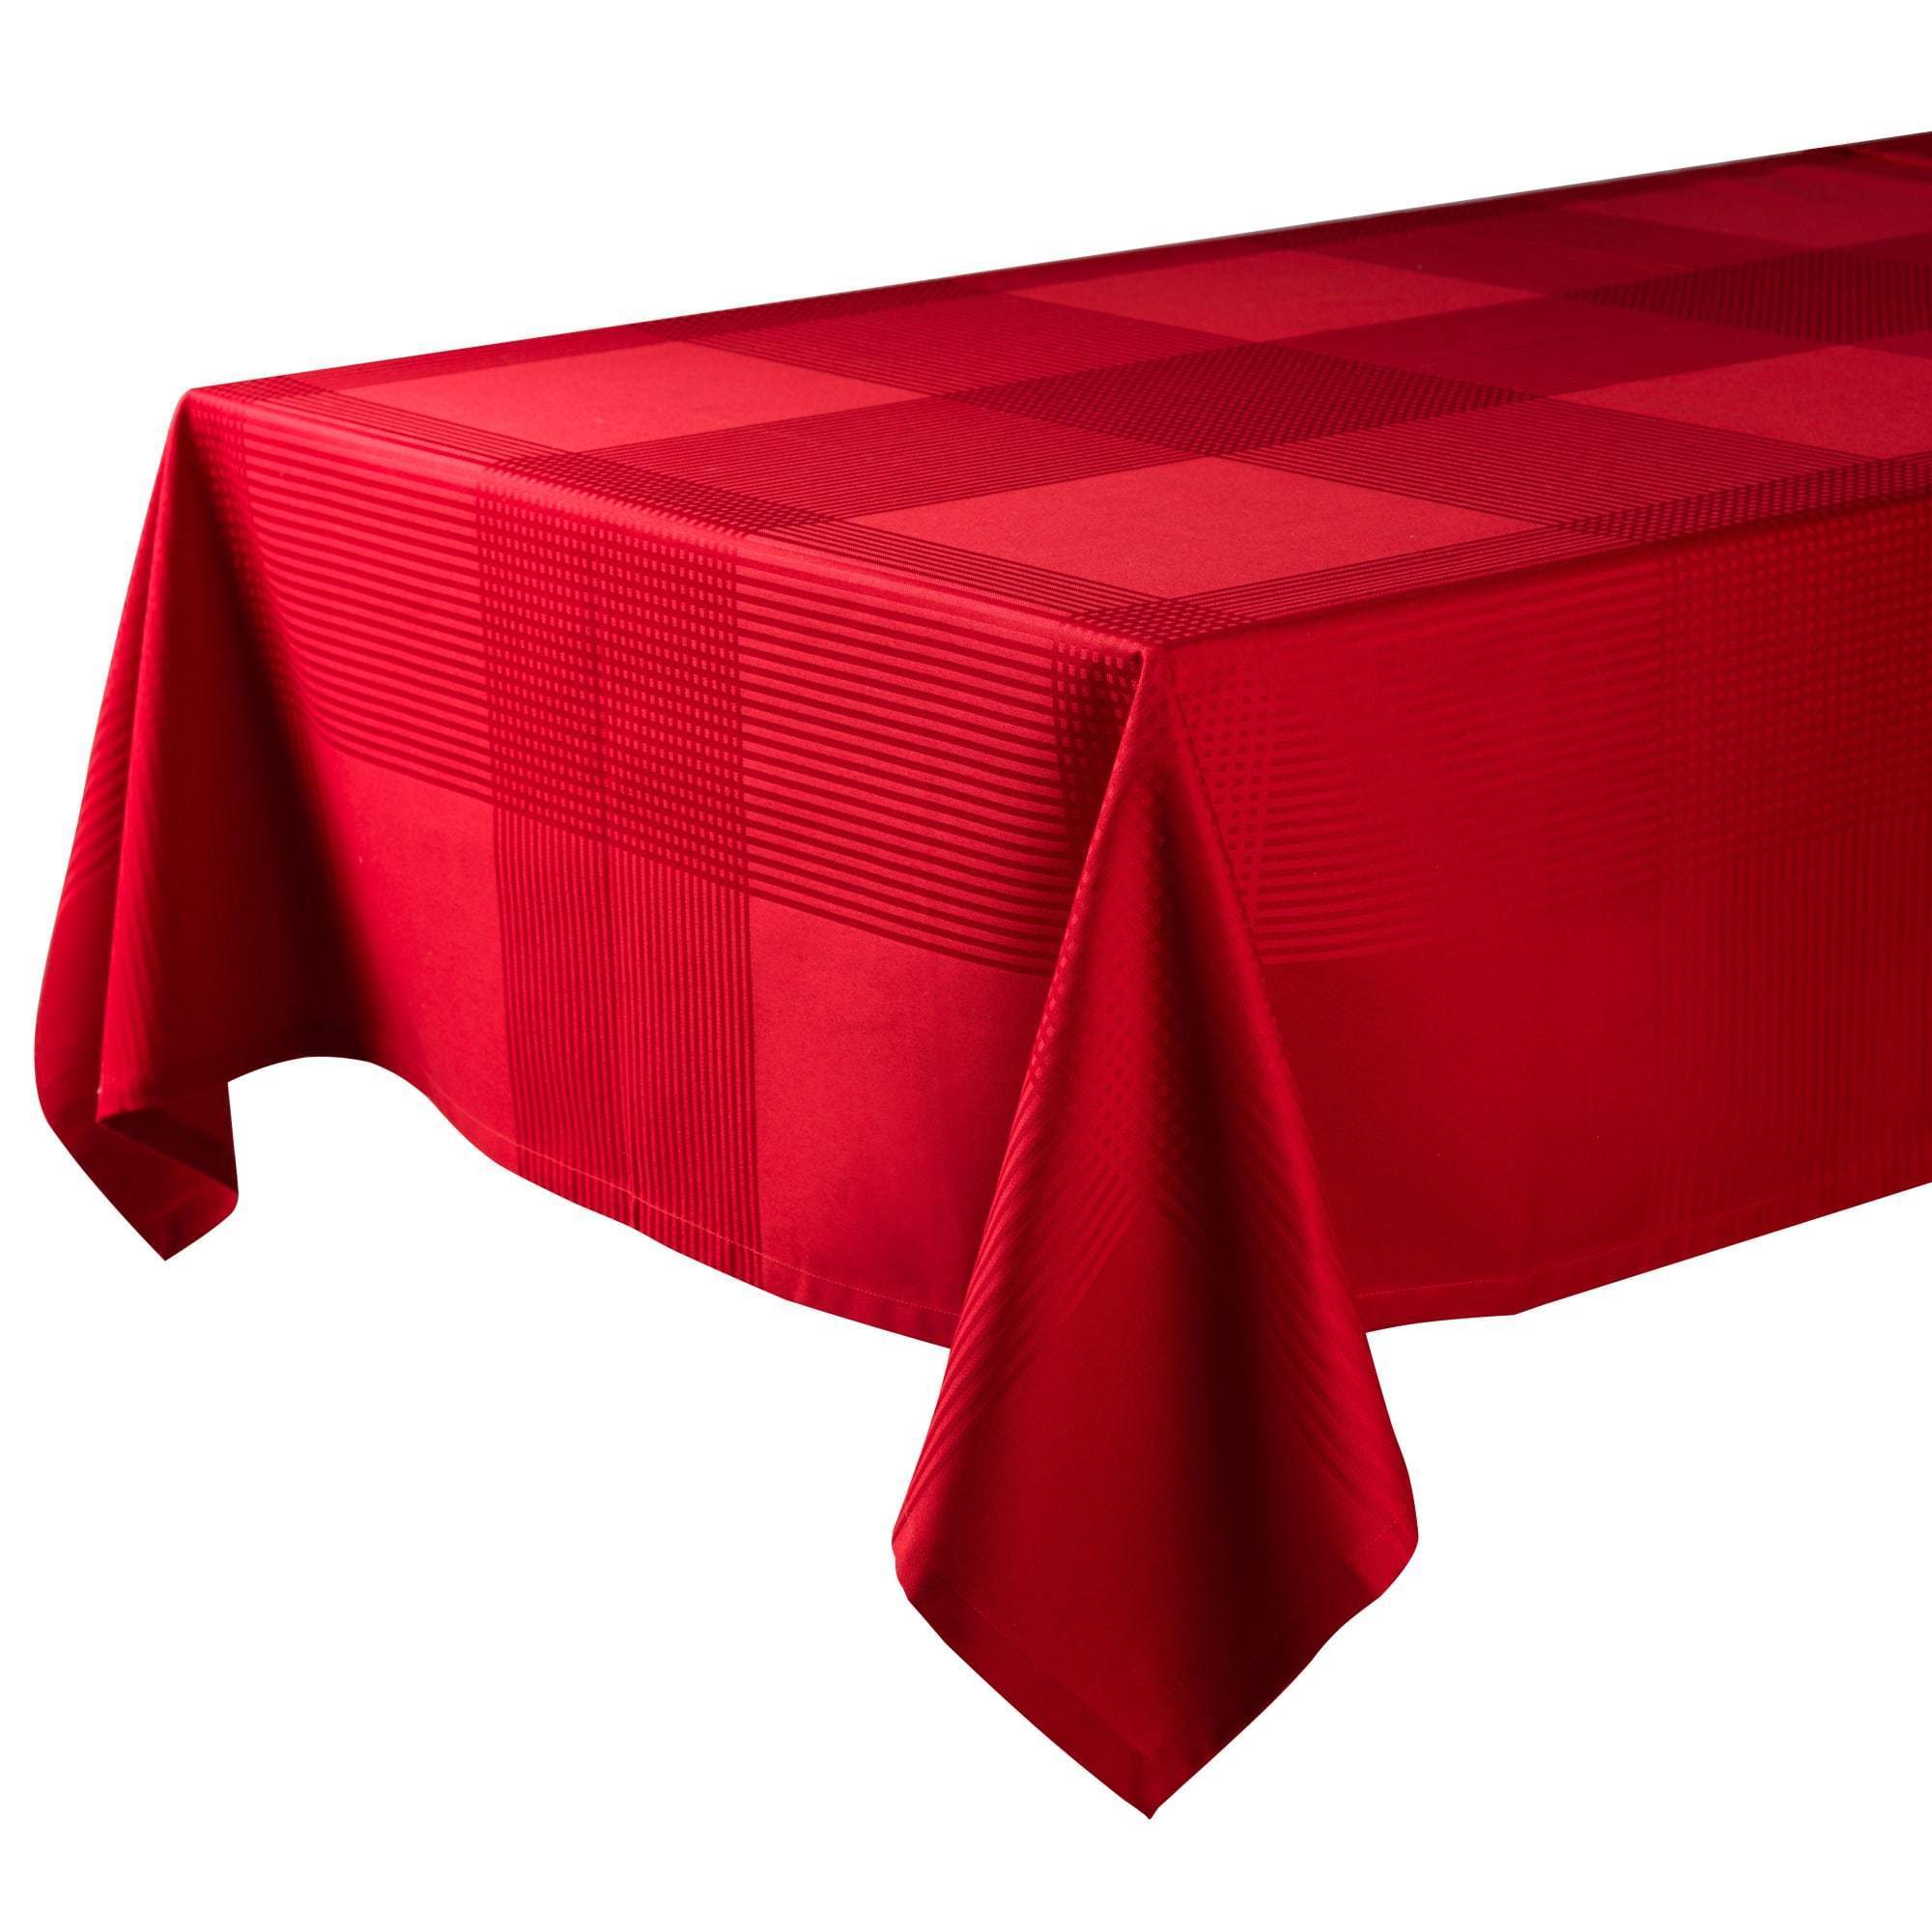 Fdb Møbler R1 Olga Tablecloth Red, 140x360cm